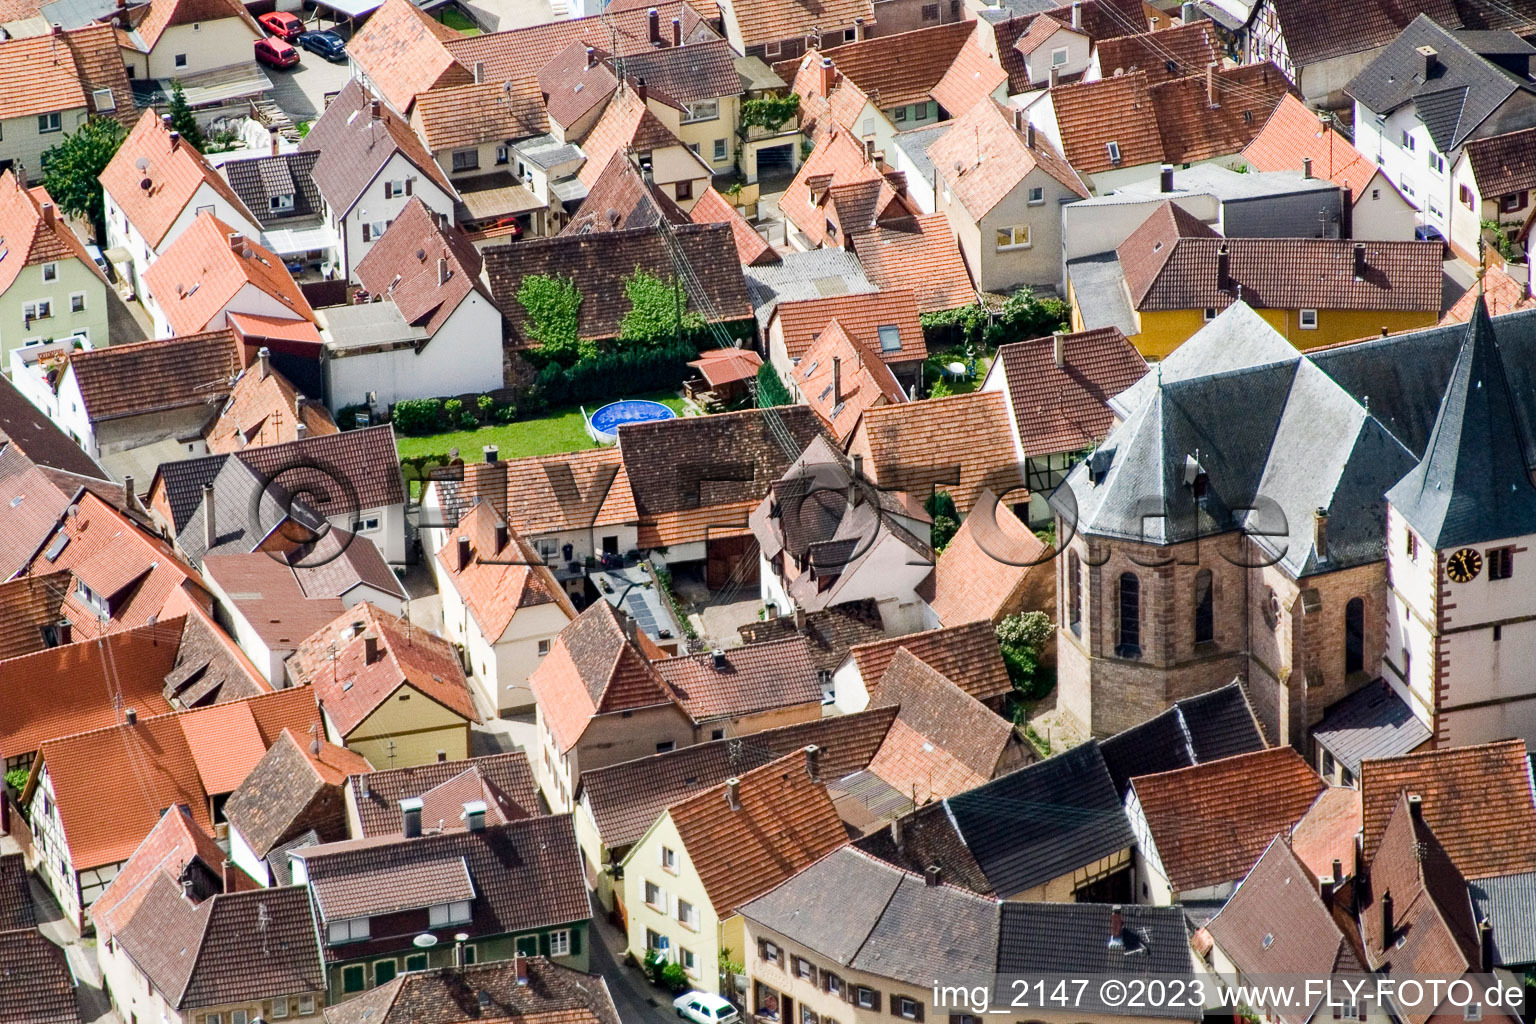 District Arzheim in Landau in der Pfalz in the state Rhineland-Palatinate, Germany from a drone